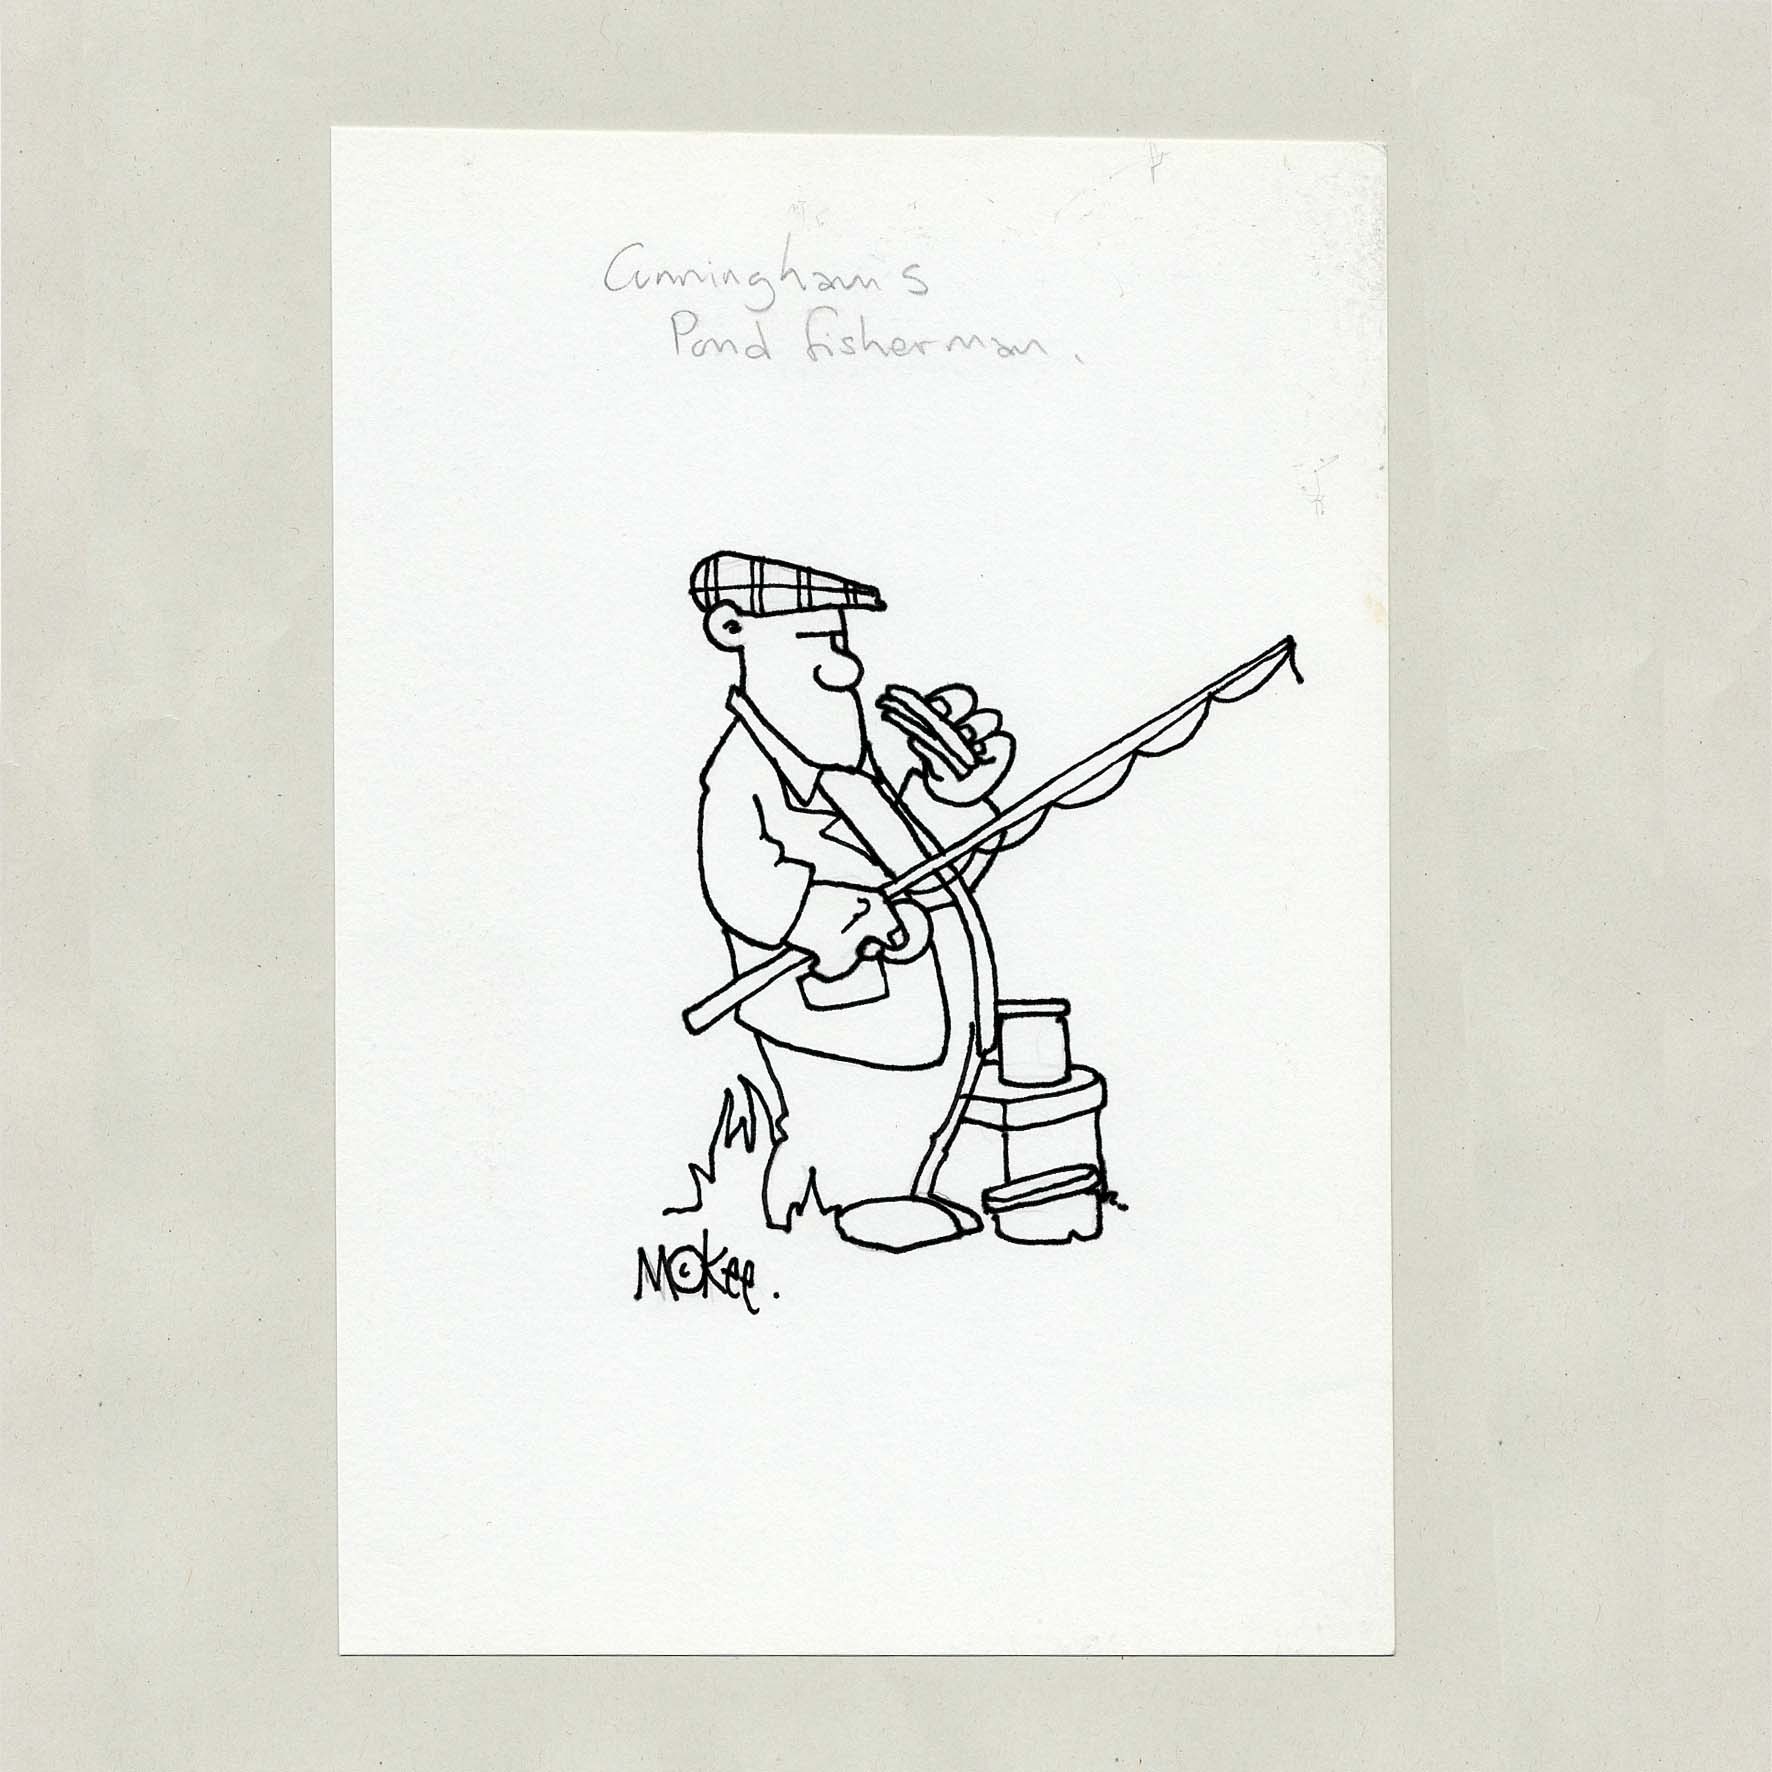 Pond Fisherman - Original Sketch